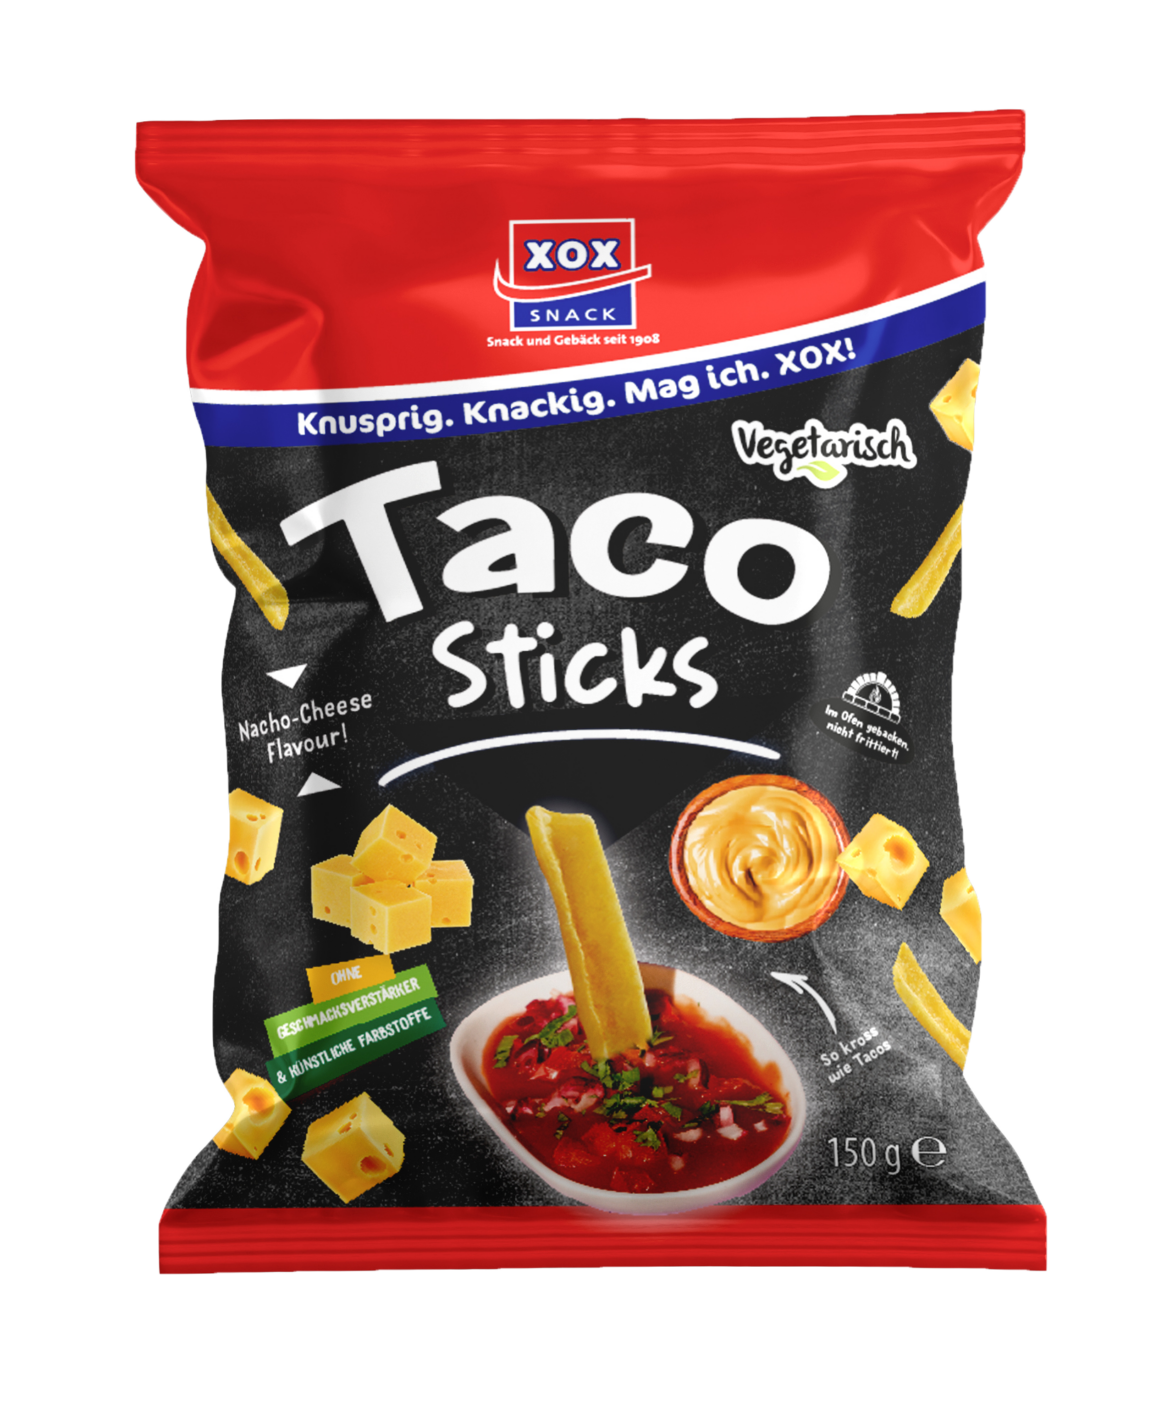 XOX Taco Sticks Nacho-Cheese 150g